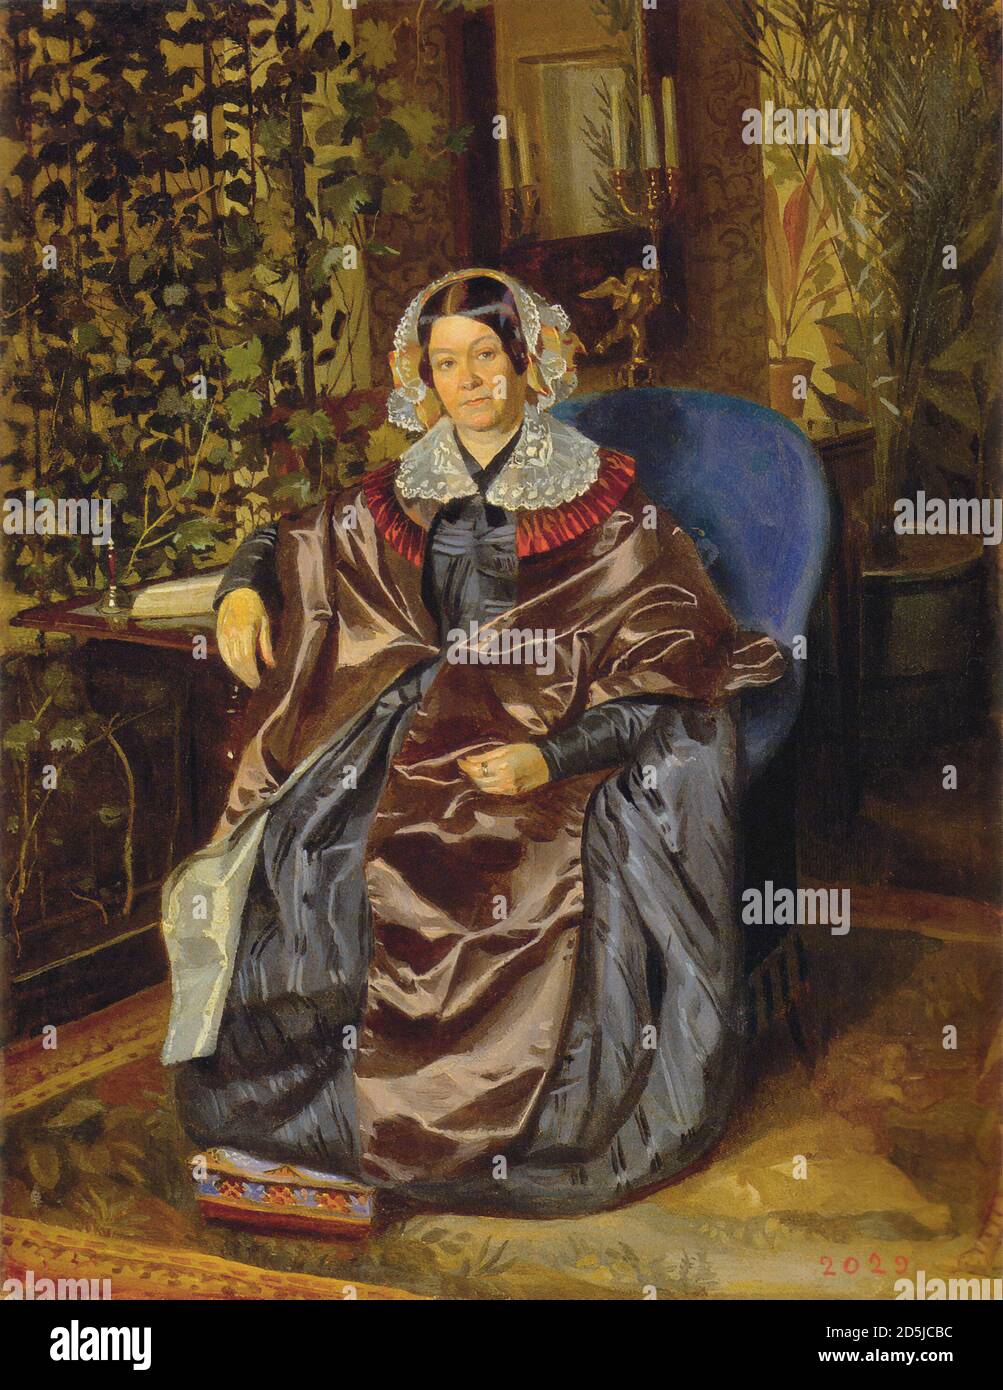 Fedotov Pavel - Retrato de Maria Druzhinina - Escuela Rusa - siglo XIX Foto de stock